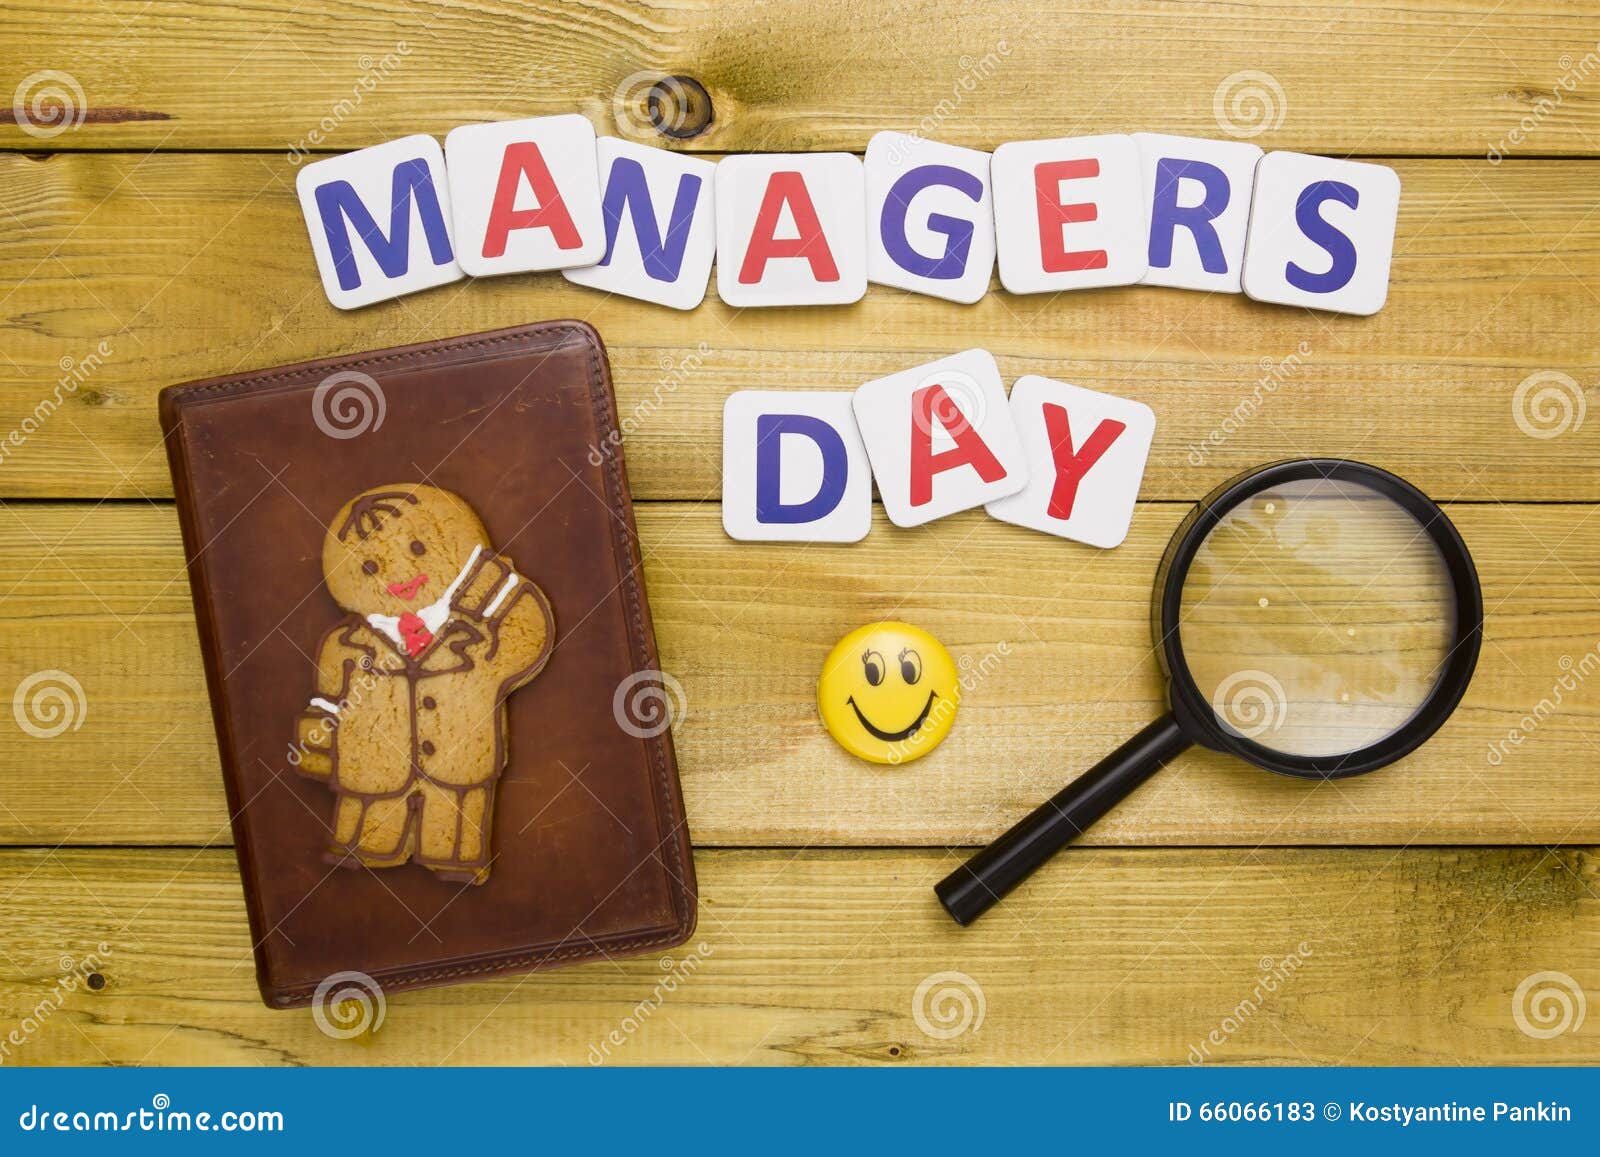 Managers day stock image. Image of happy, season, cake 66066183